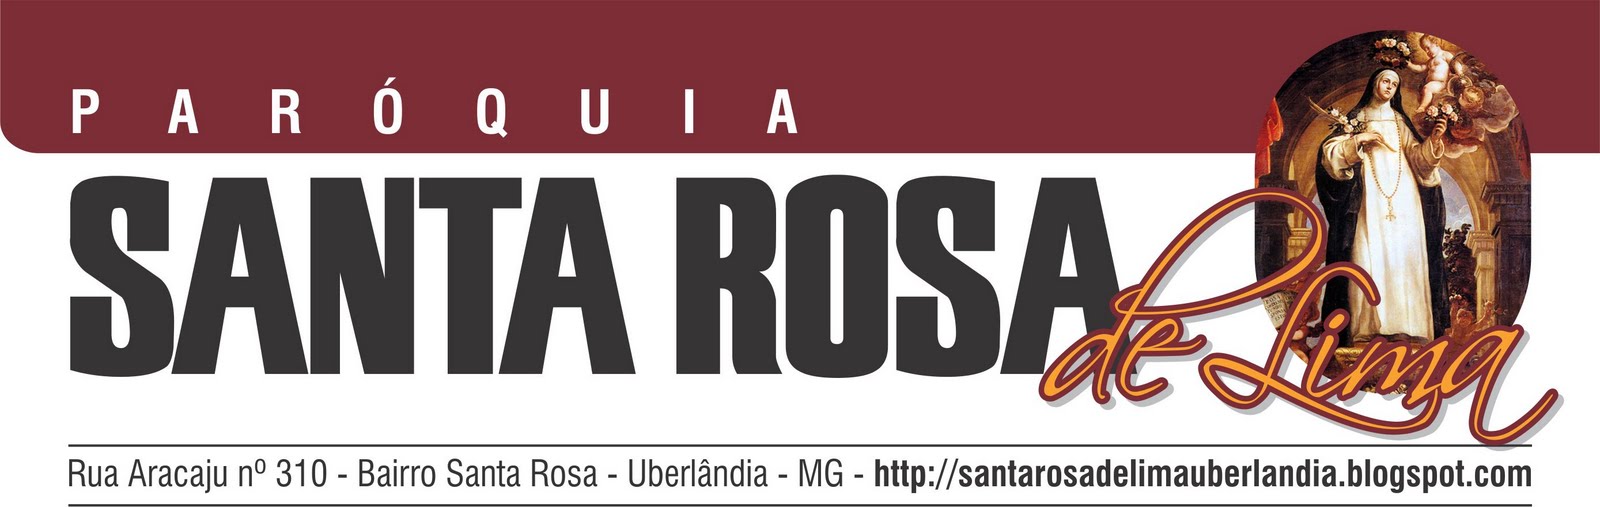 PARÓQUIA SANTA ROSA DE LIMA - UBERLÂNDIA - MG